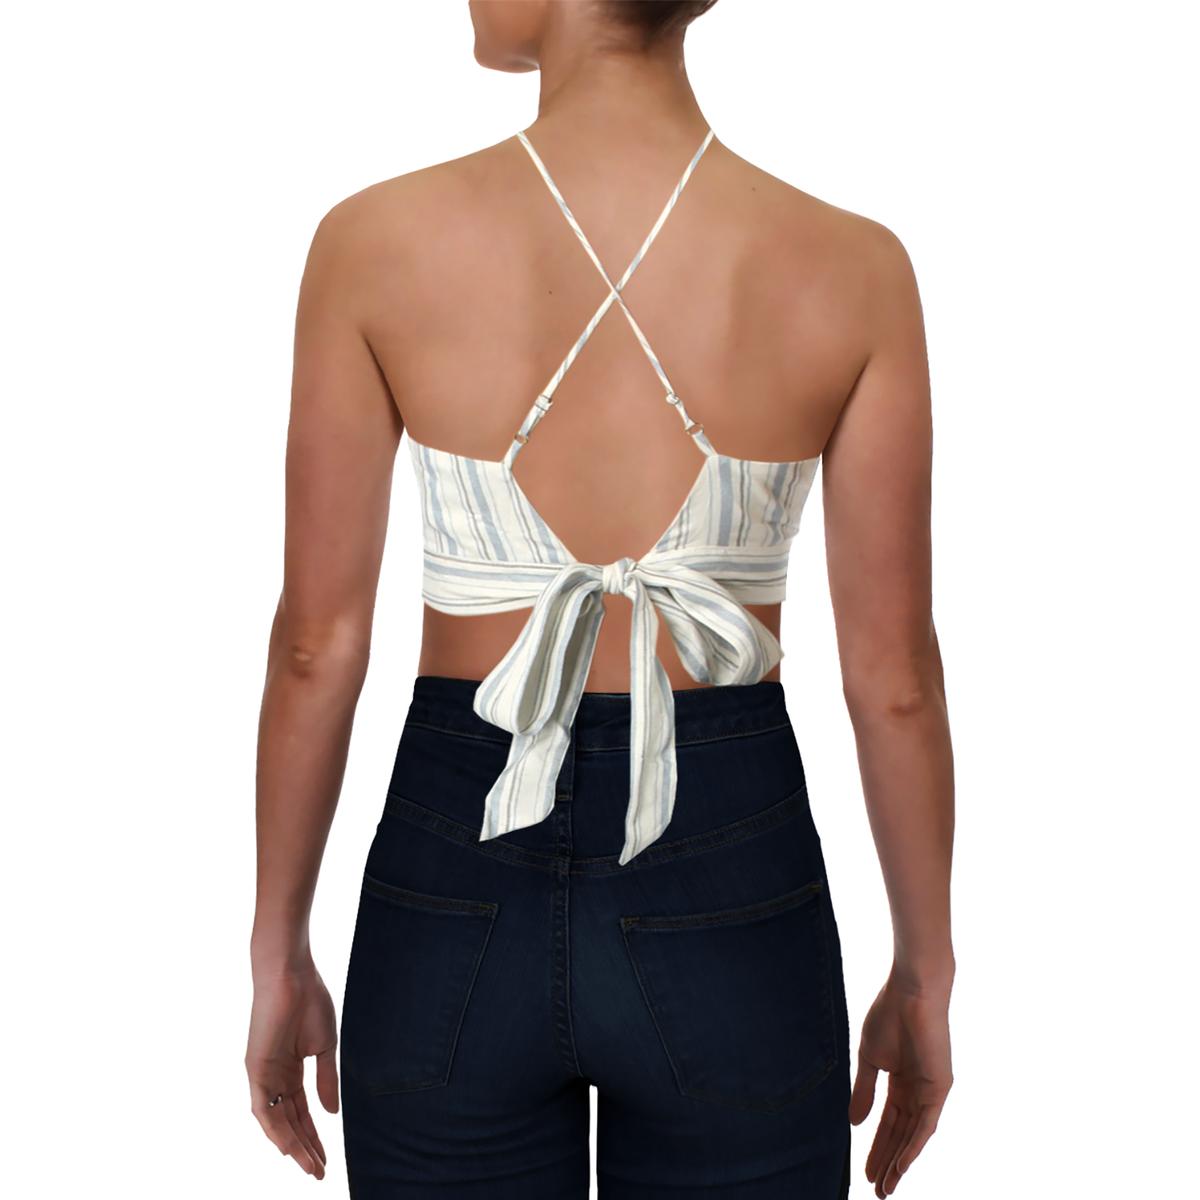 Aqua Womens White Striped High Neck Criss Cross Back Crop Top Shirt S BHFO EBay